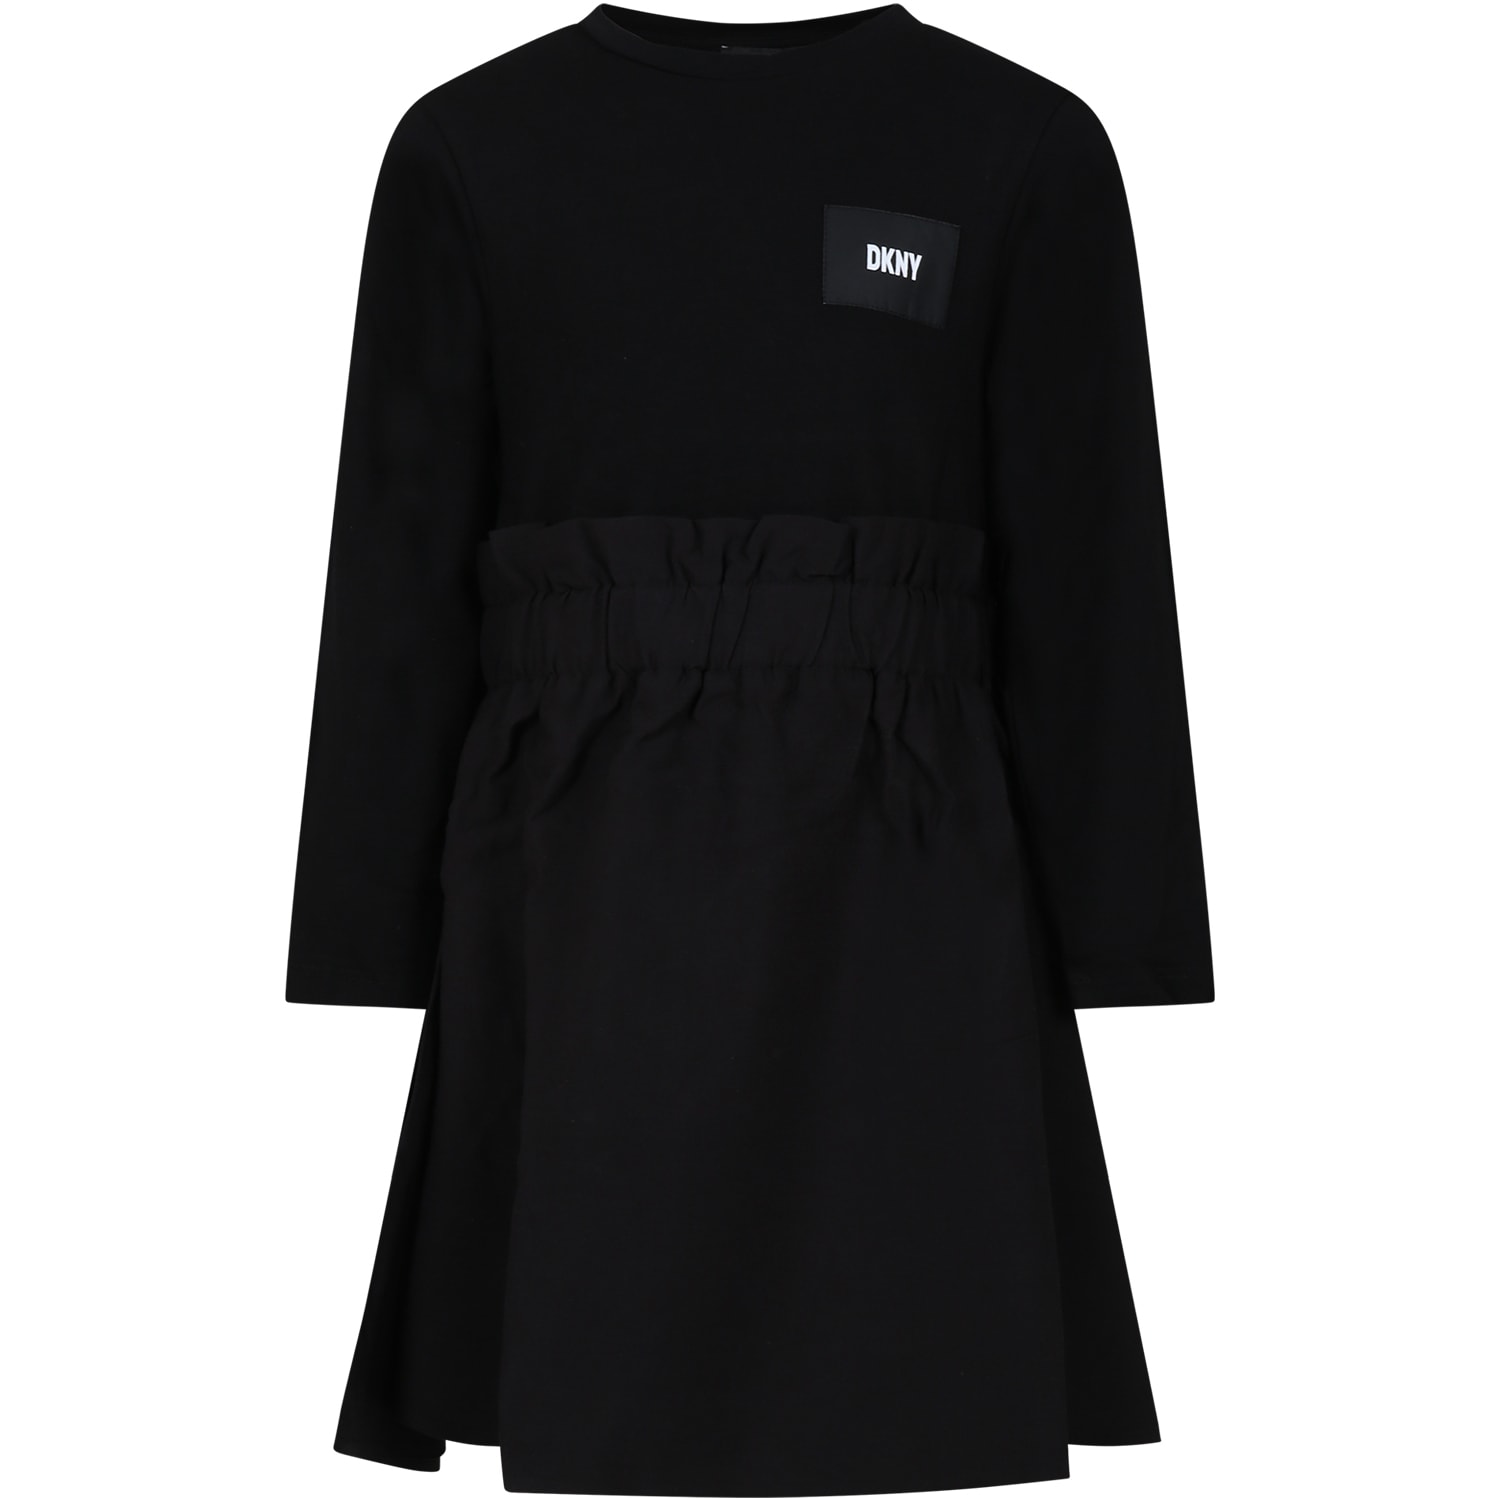 DKNY BLACK DRESS FOR GIRL WITH LOGO